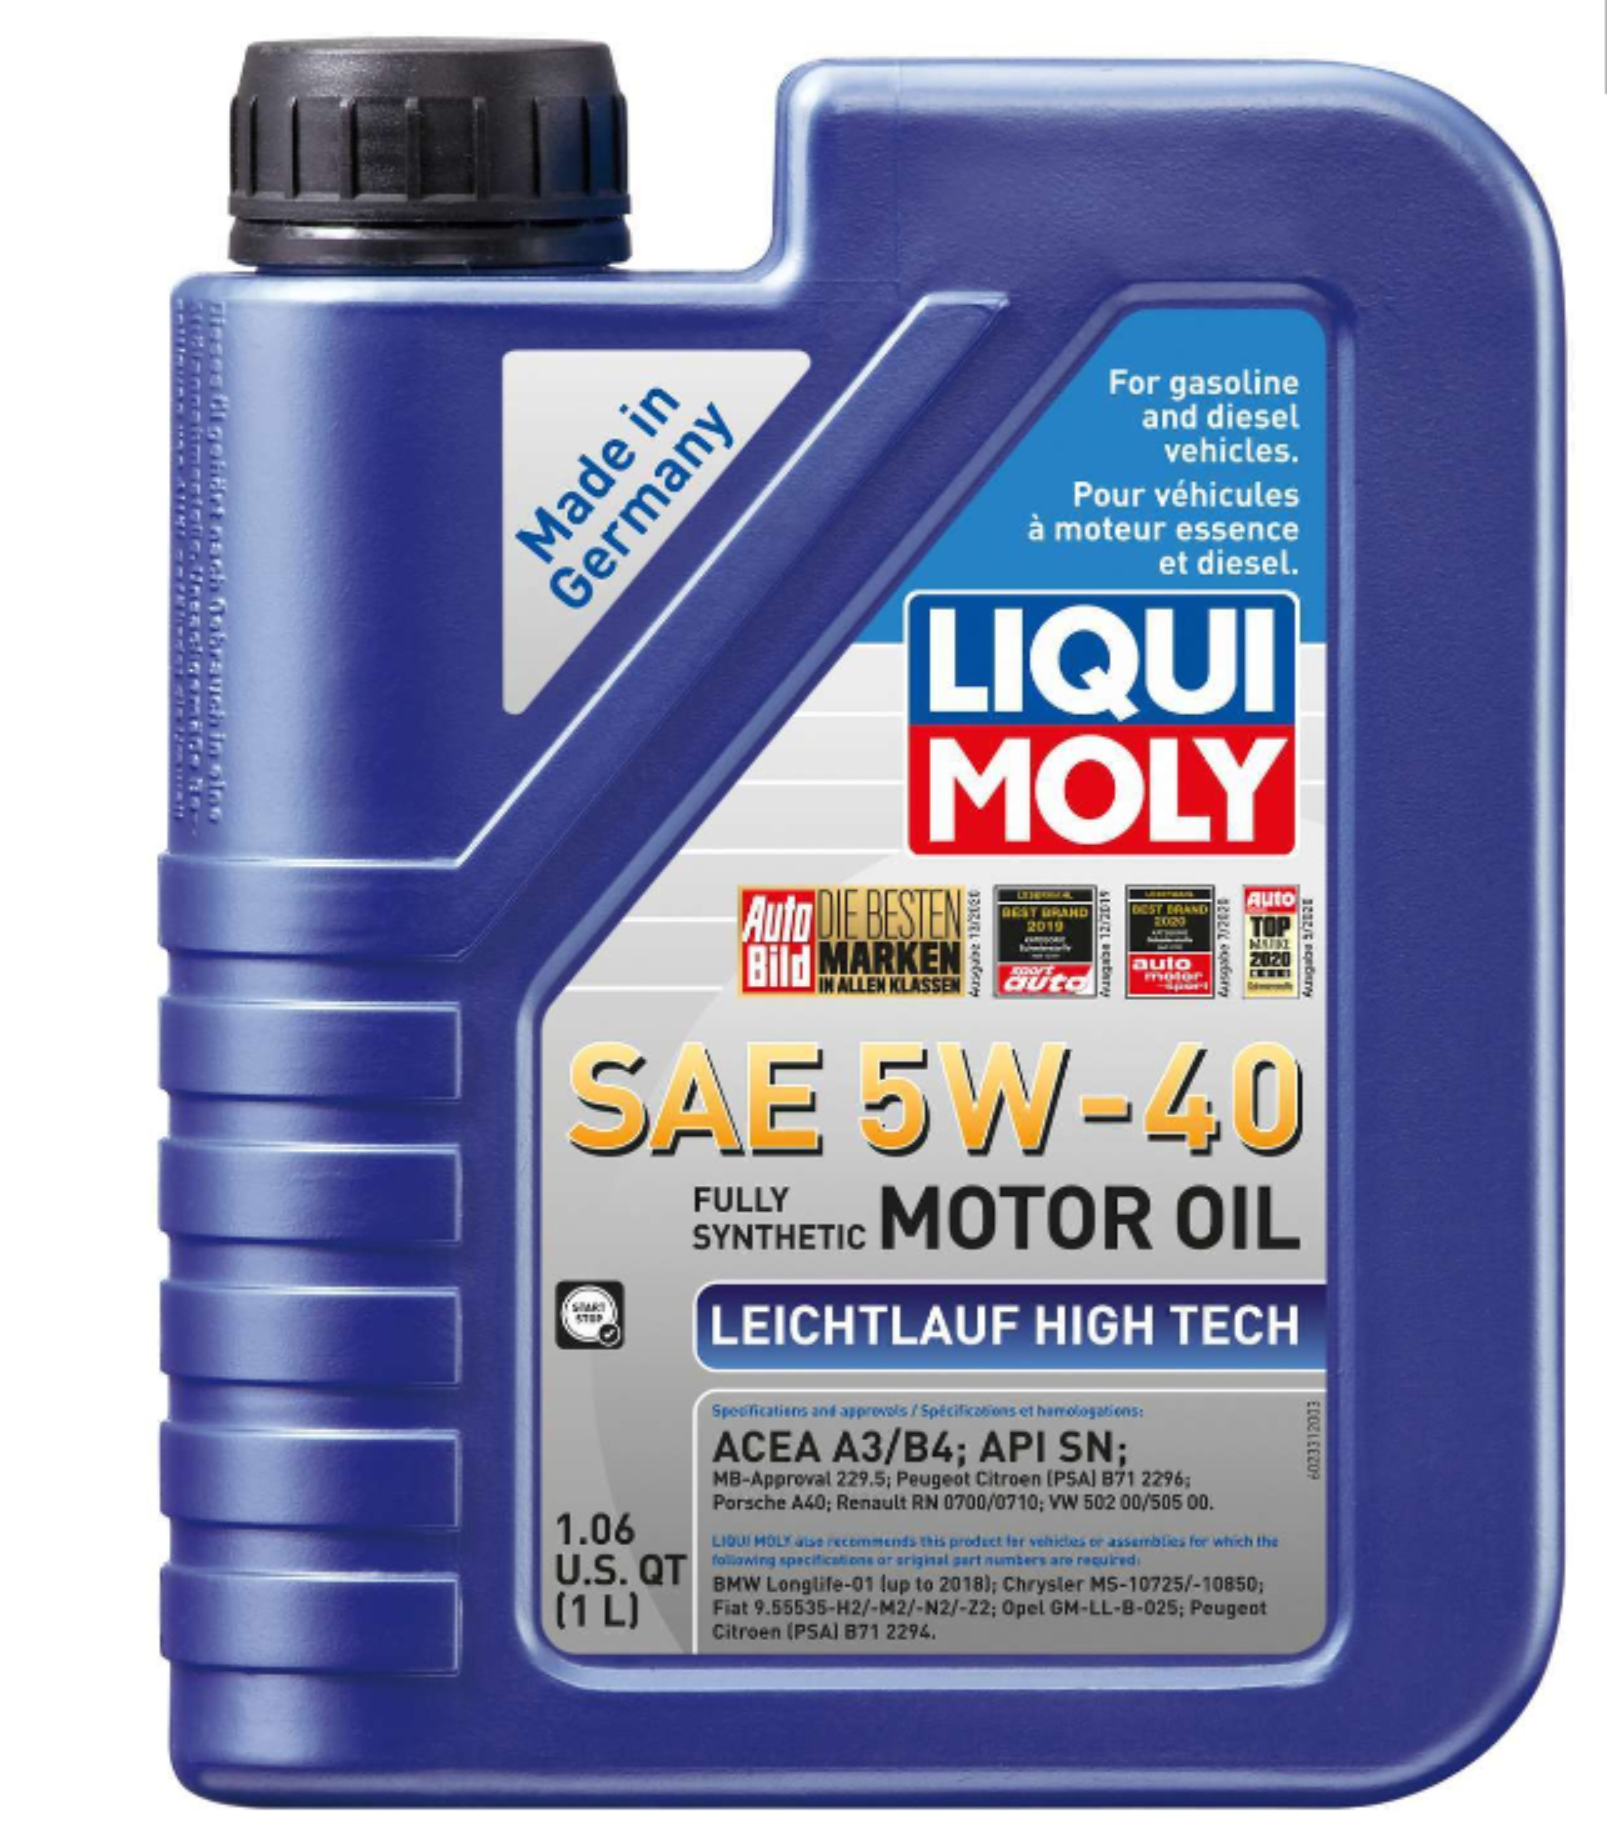 LiquiMoly Leichtlauf High Tech 5W-40 Motor Oil - 1 Liters